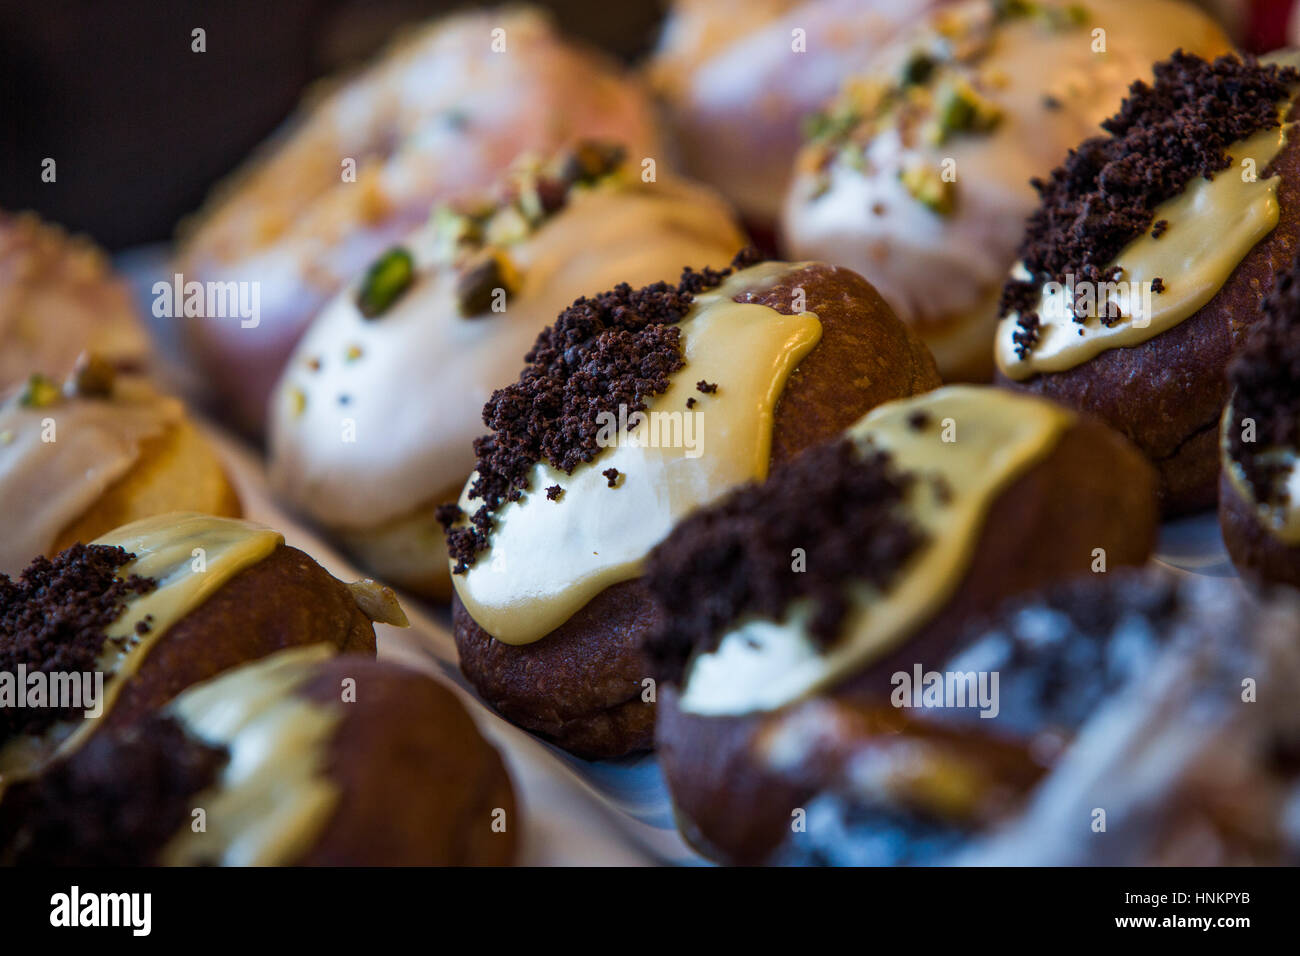 Chocolate doughnut with custard glaze and chocolate topping. Stock Photo